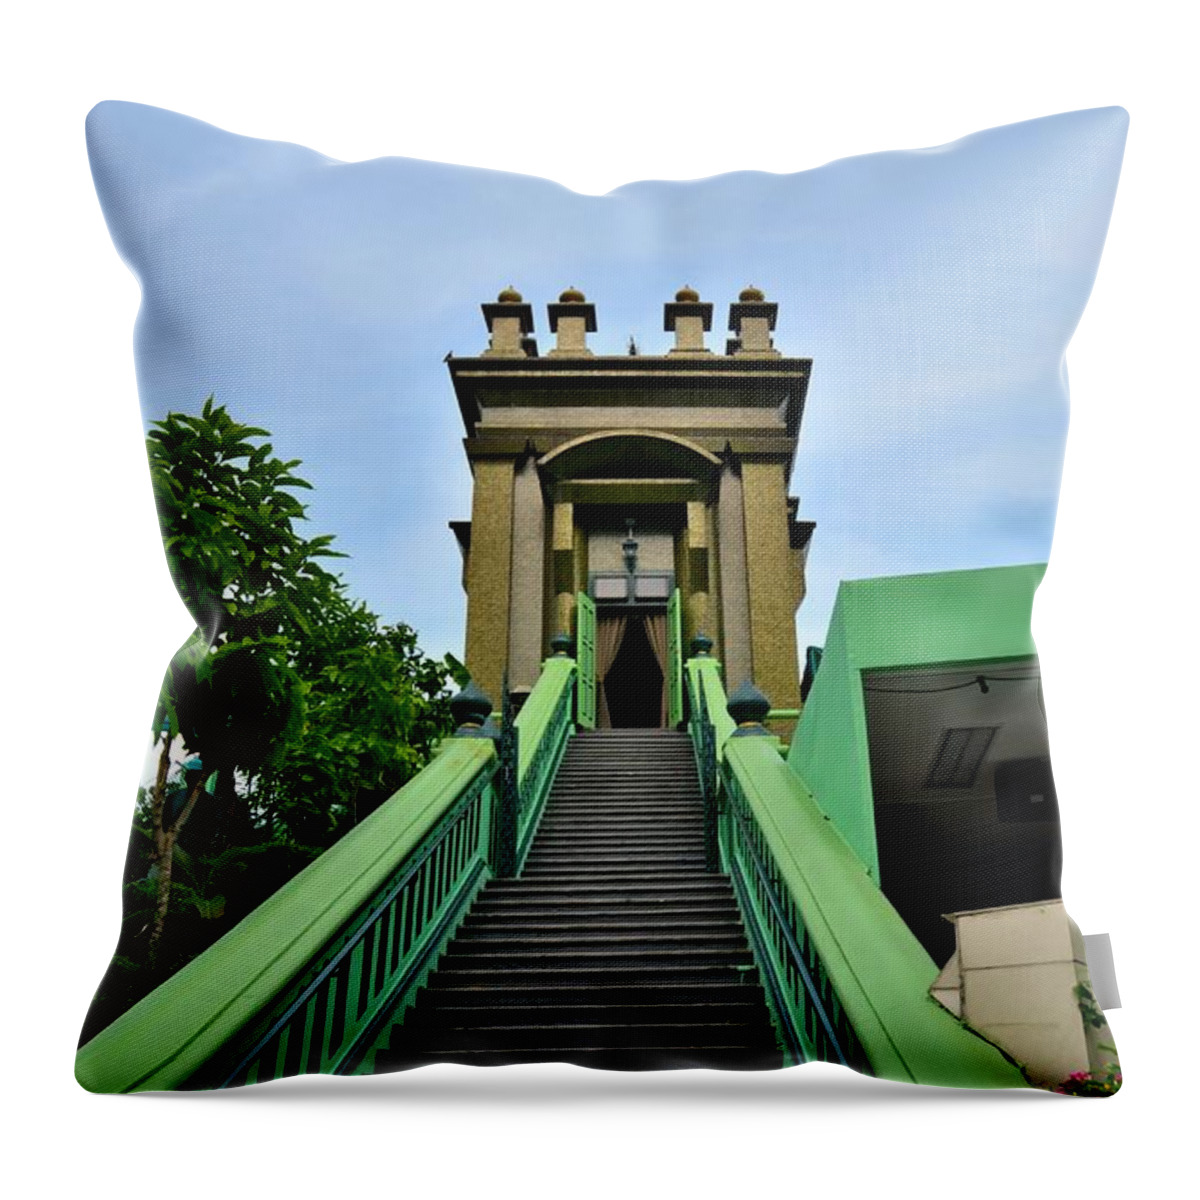 Singapore Throw Pillow featuring the photograph Steps to Habib Noh Muslim Sufi saint mystic shrine Singapore by Imran Ahmed